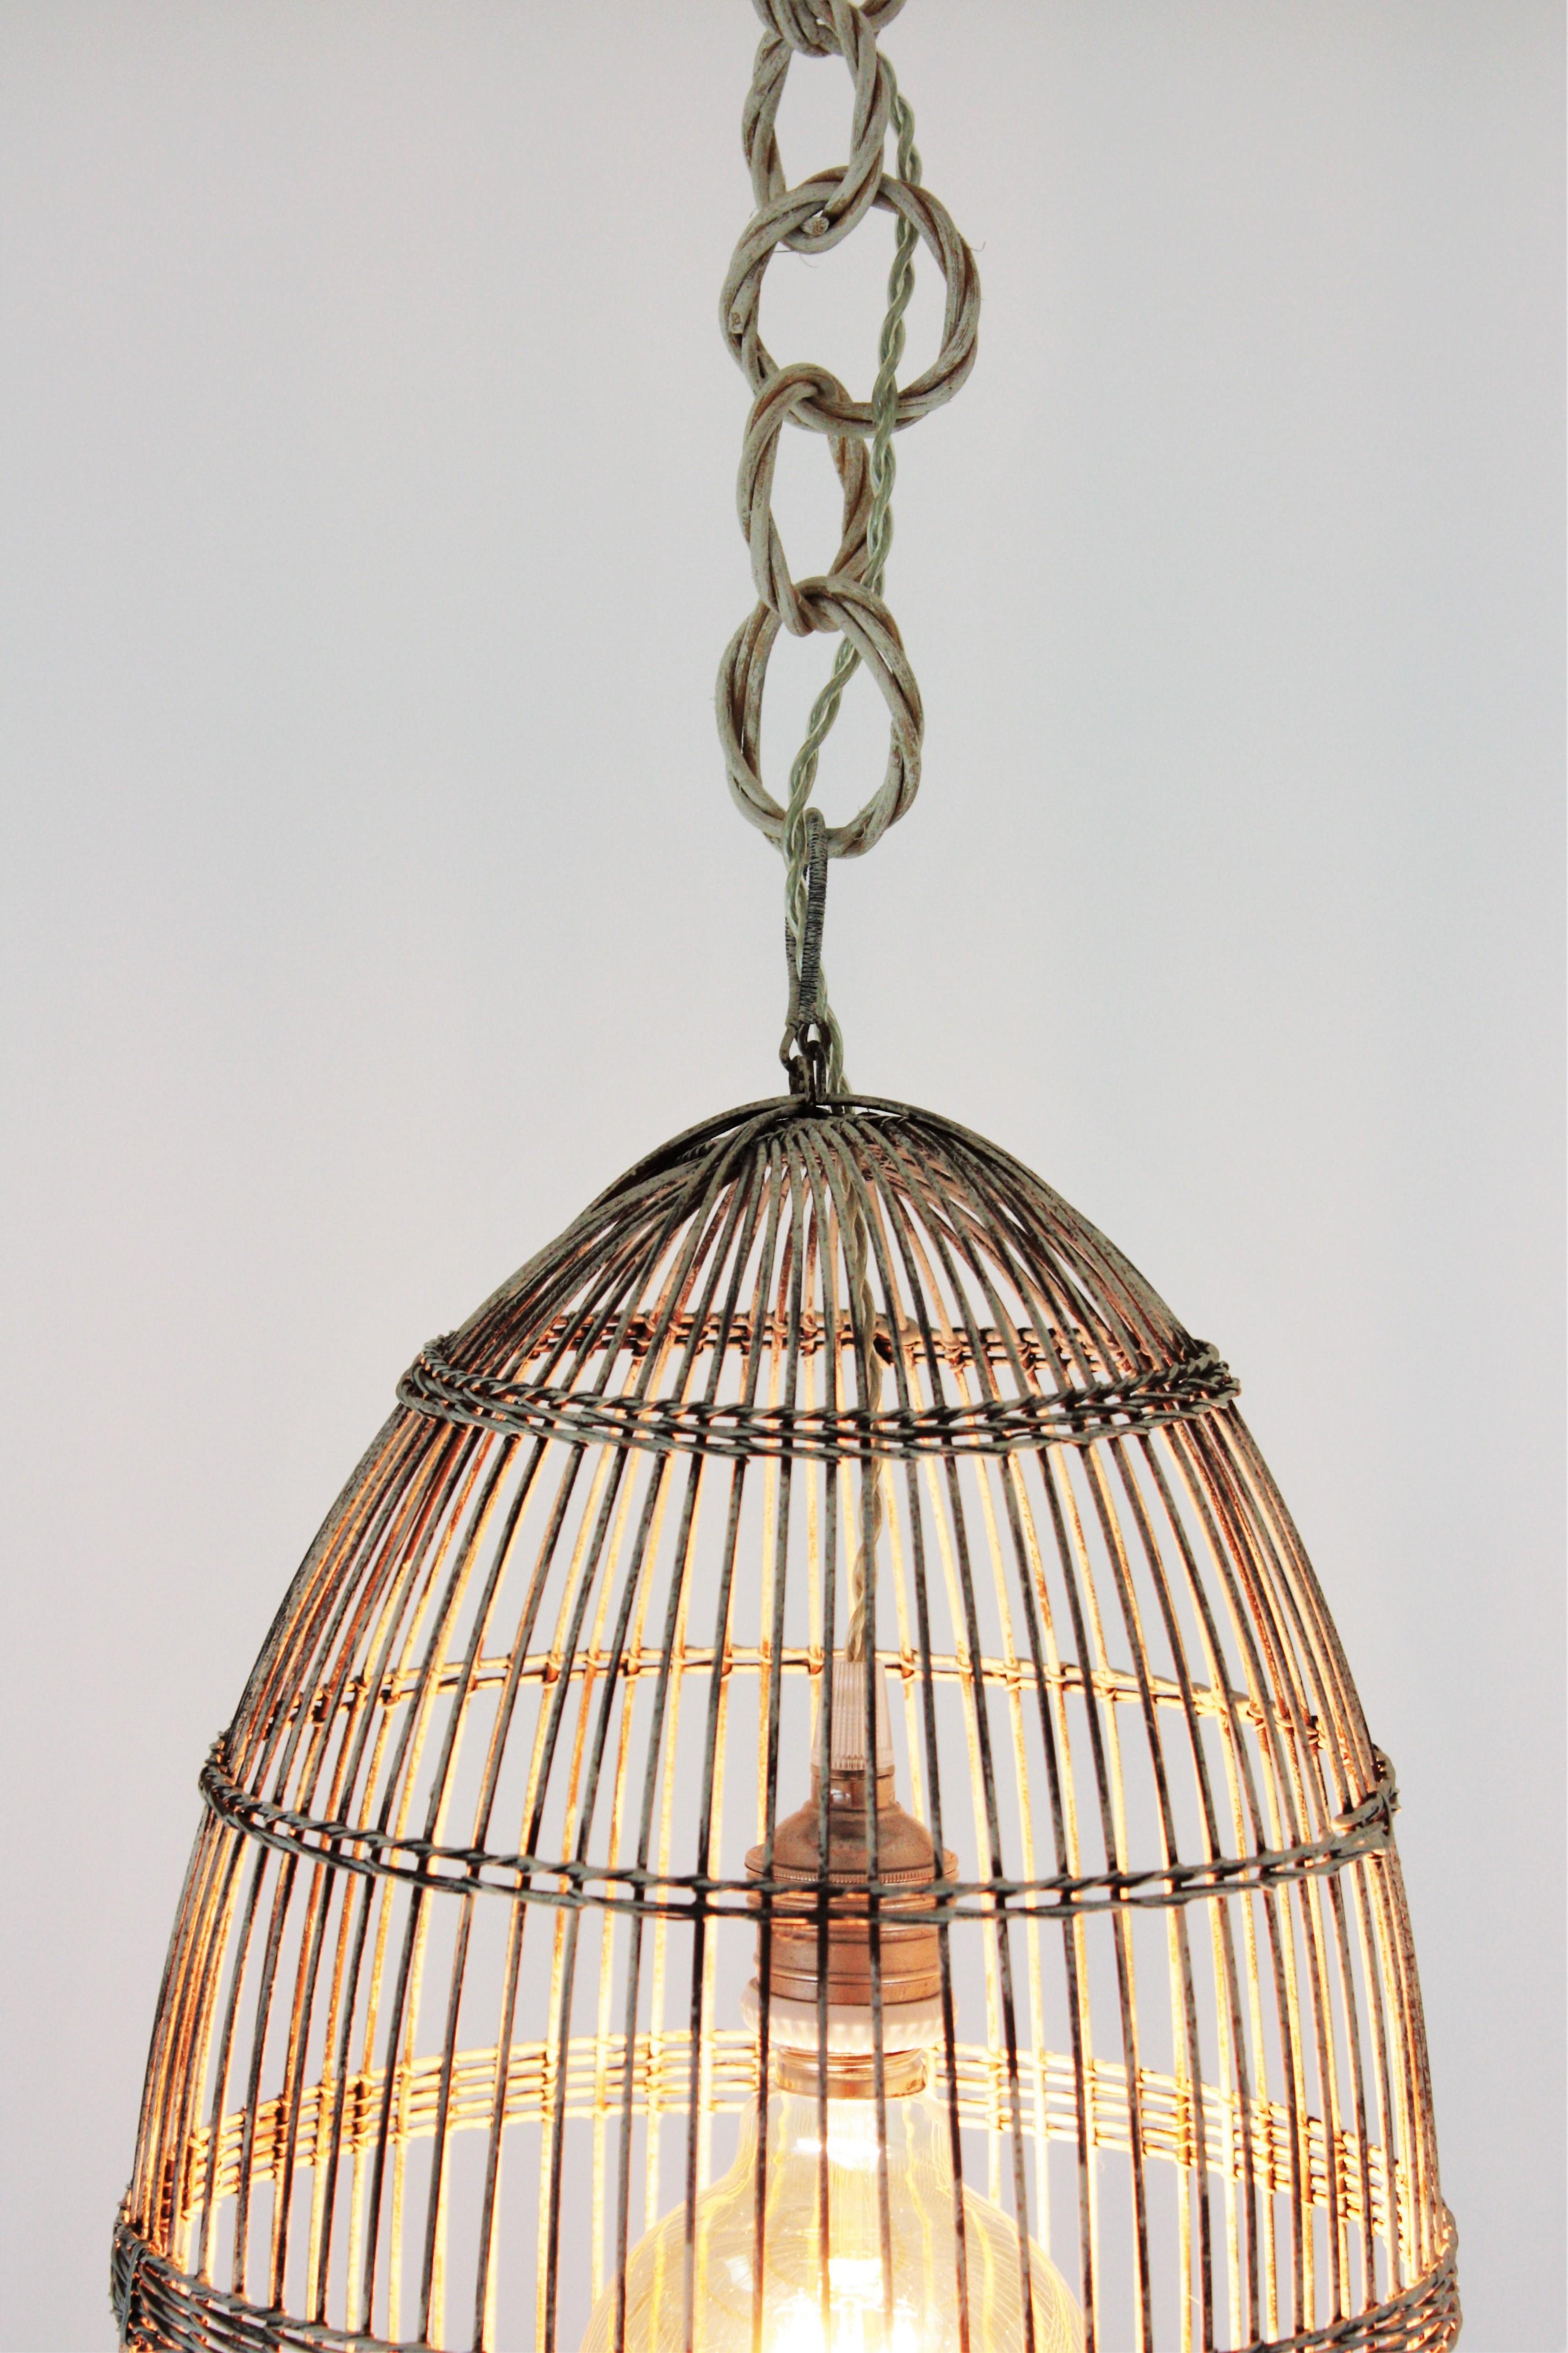 Birdcage Rustic Hanging Light Pendant Lamp 10